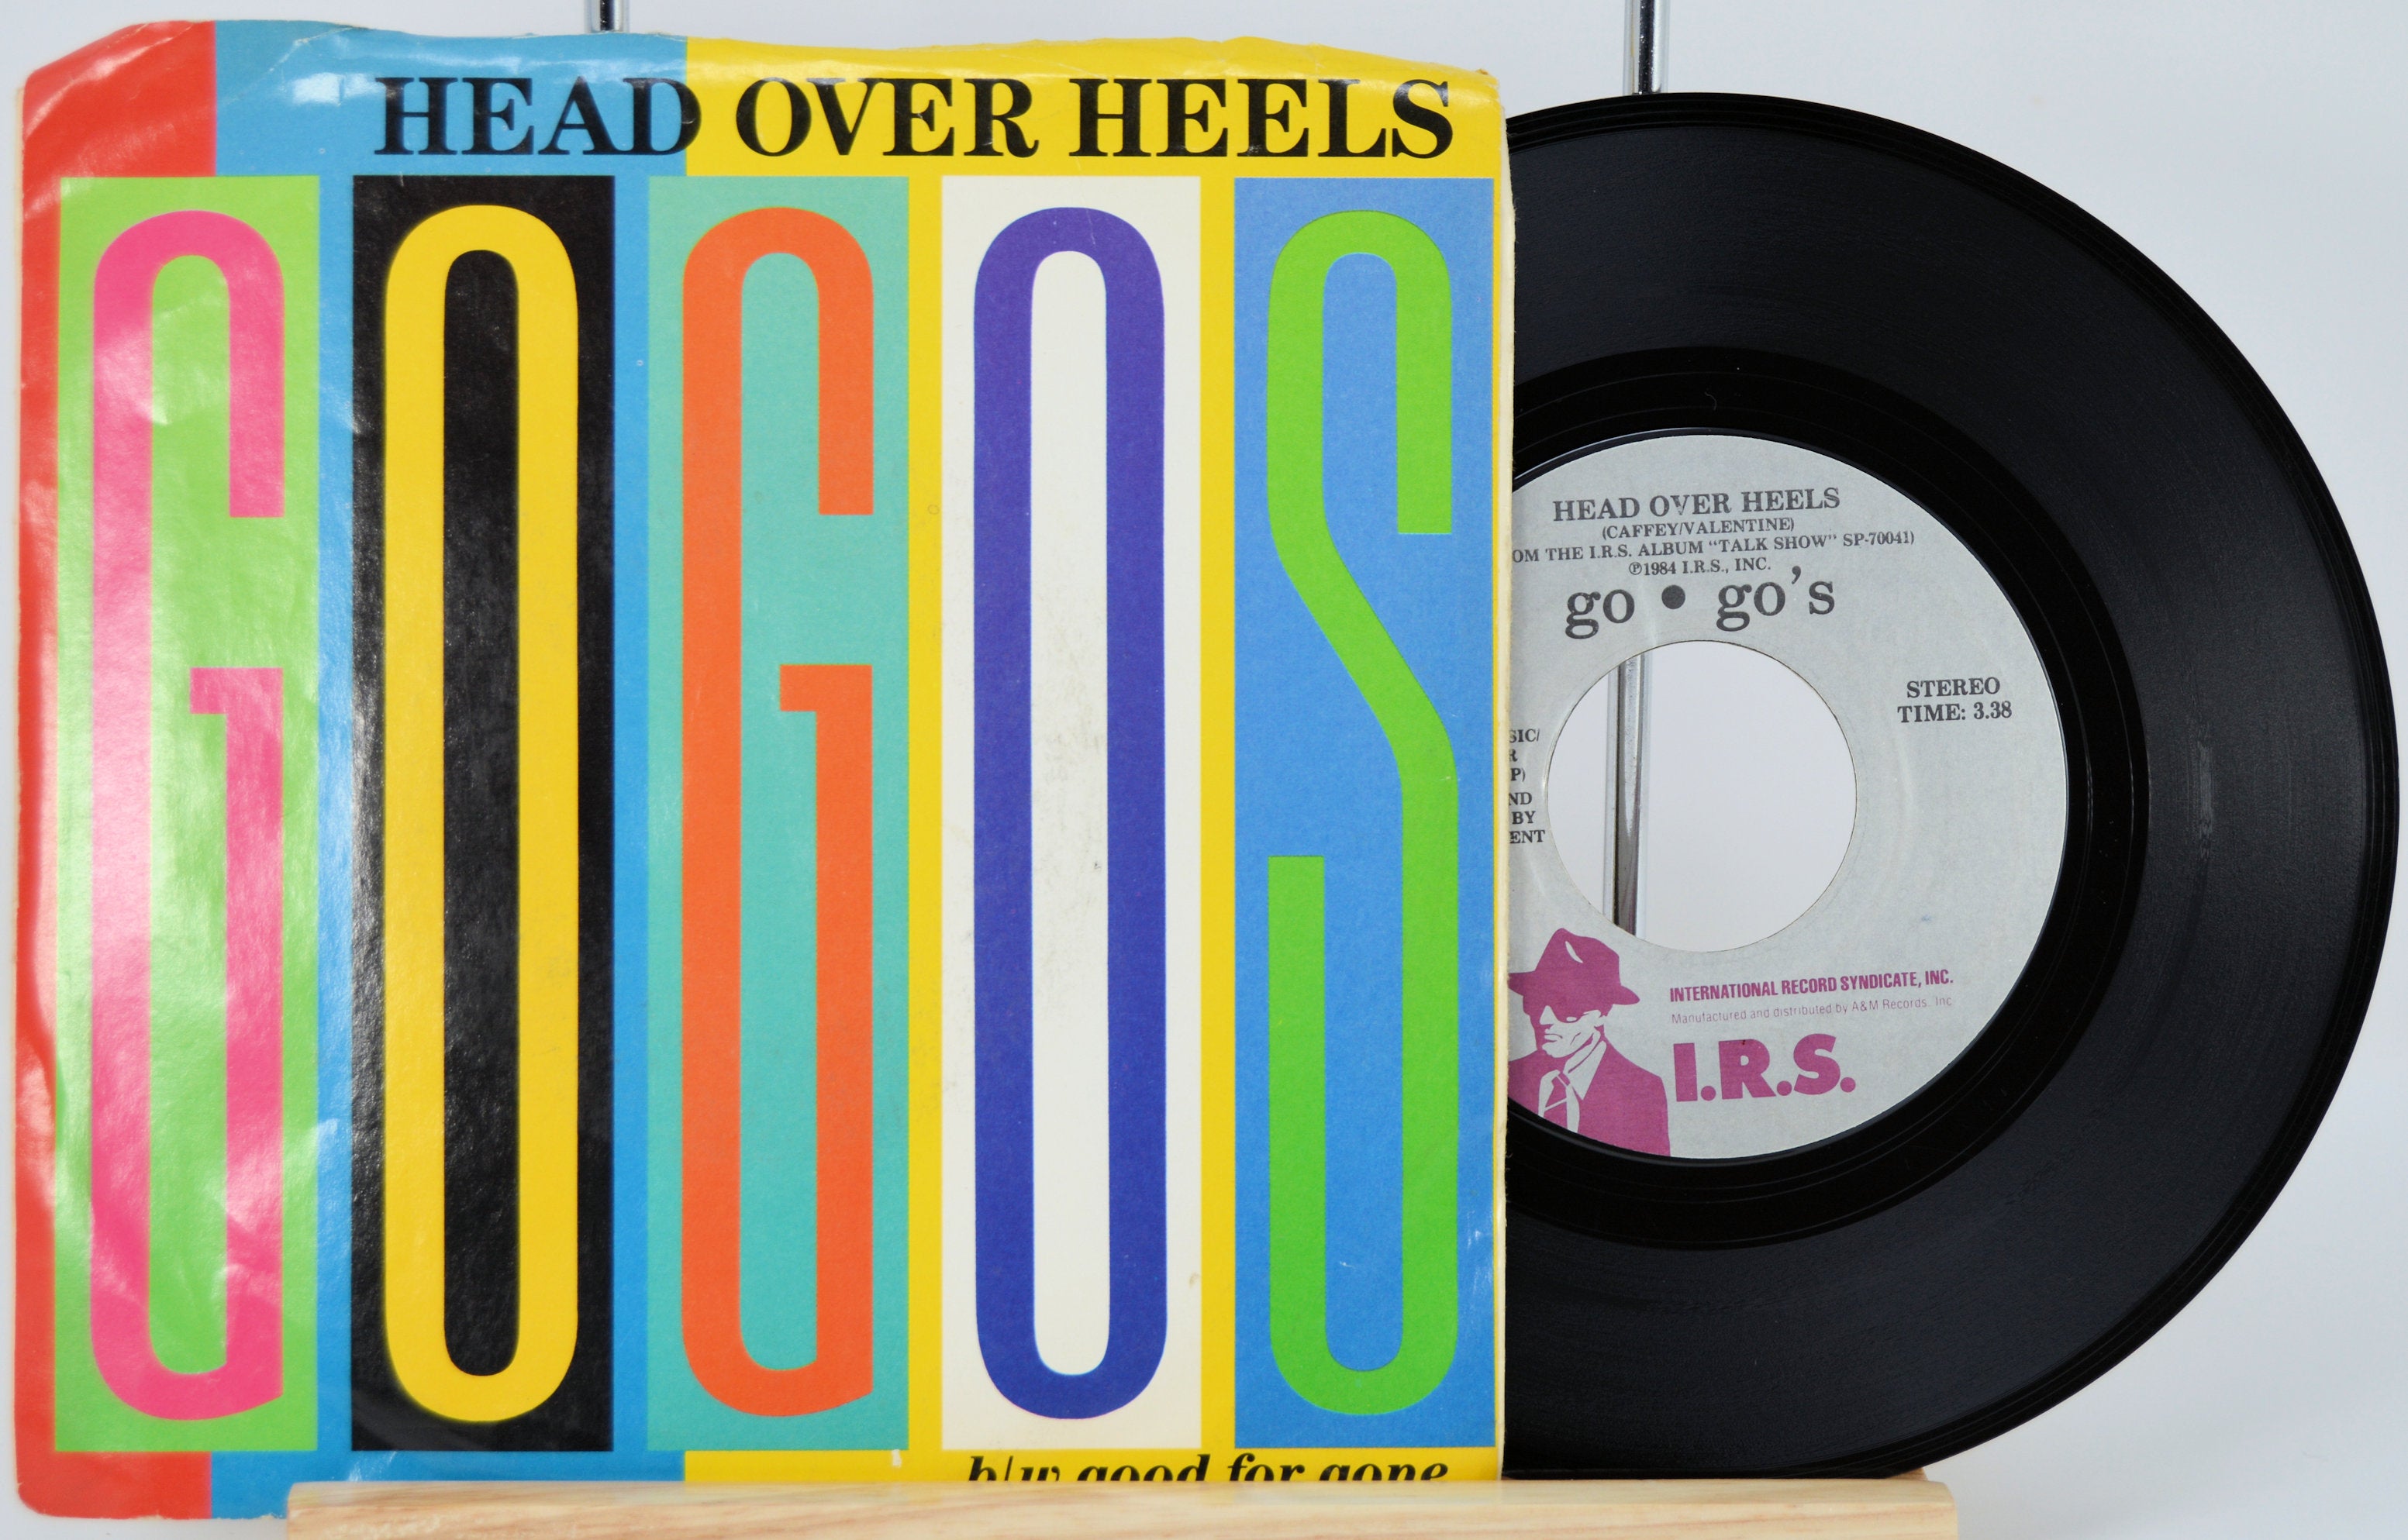 The Go-Go's - “Head Over Heels” Live at the Whisky A Go-Go 12/14/21 -  YouTube